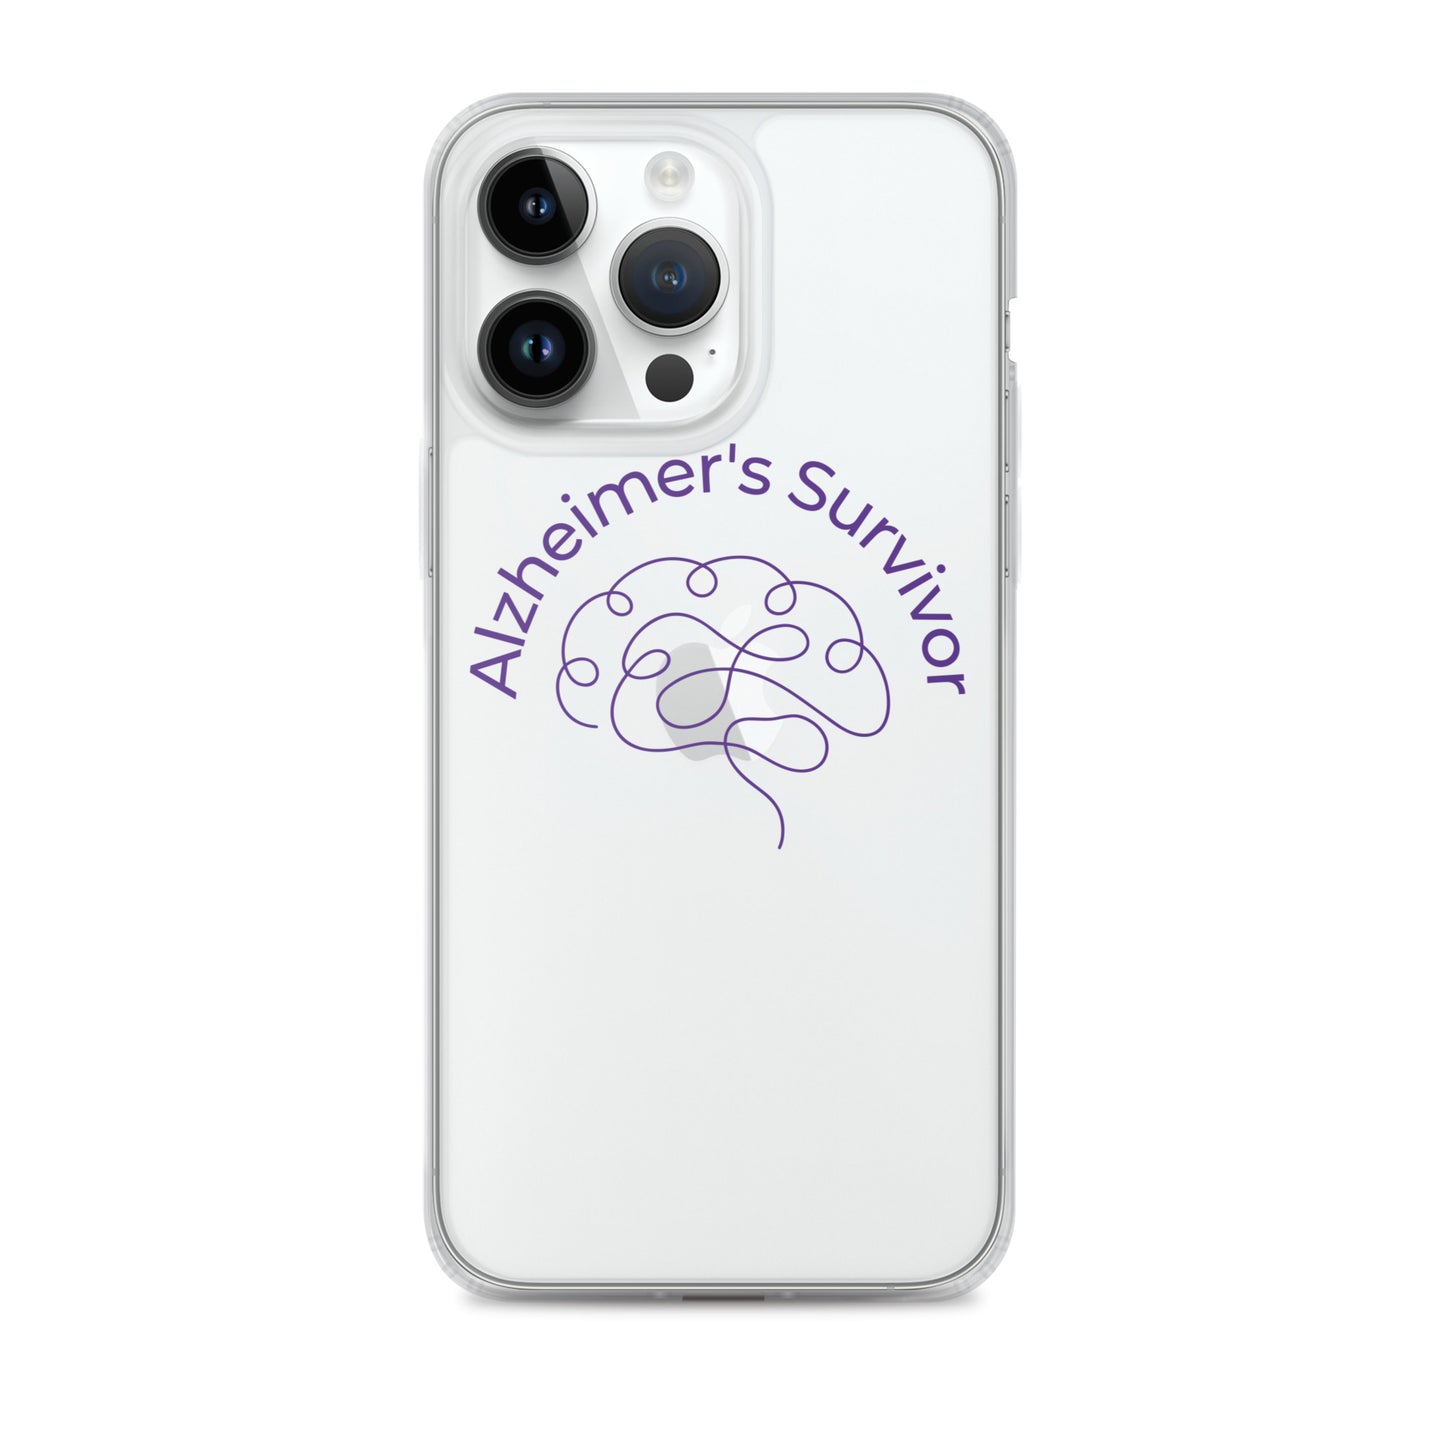 Alzheimer's Survivor Clear Case for iPhone®